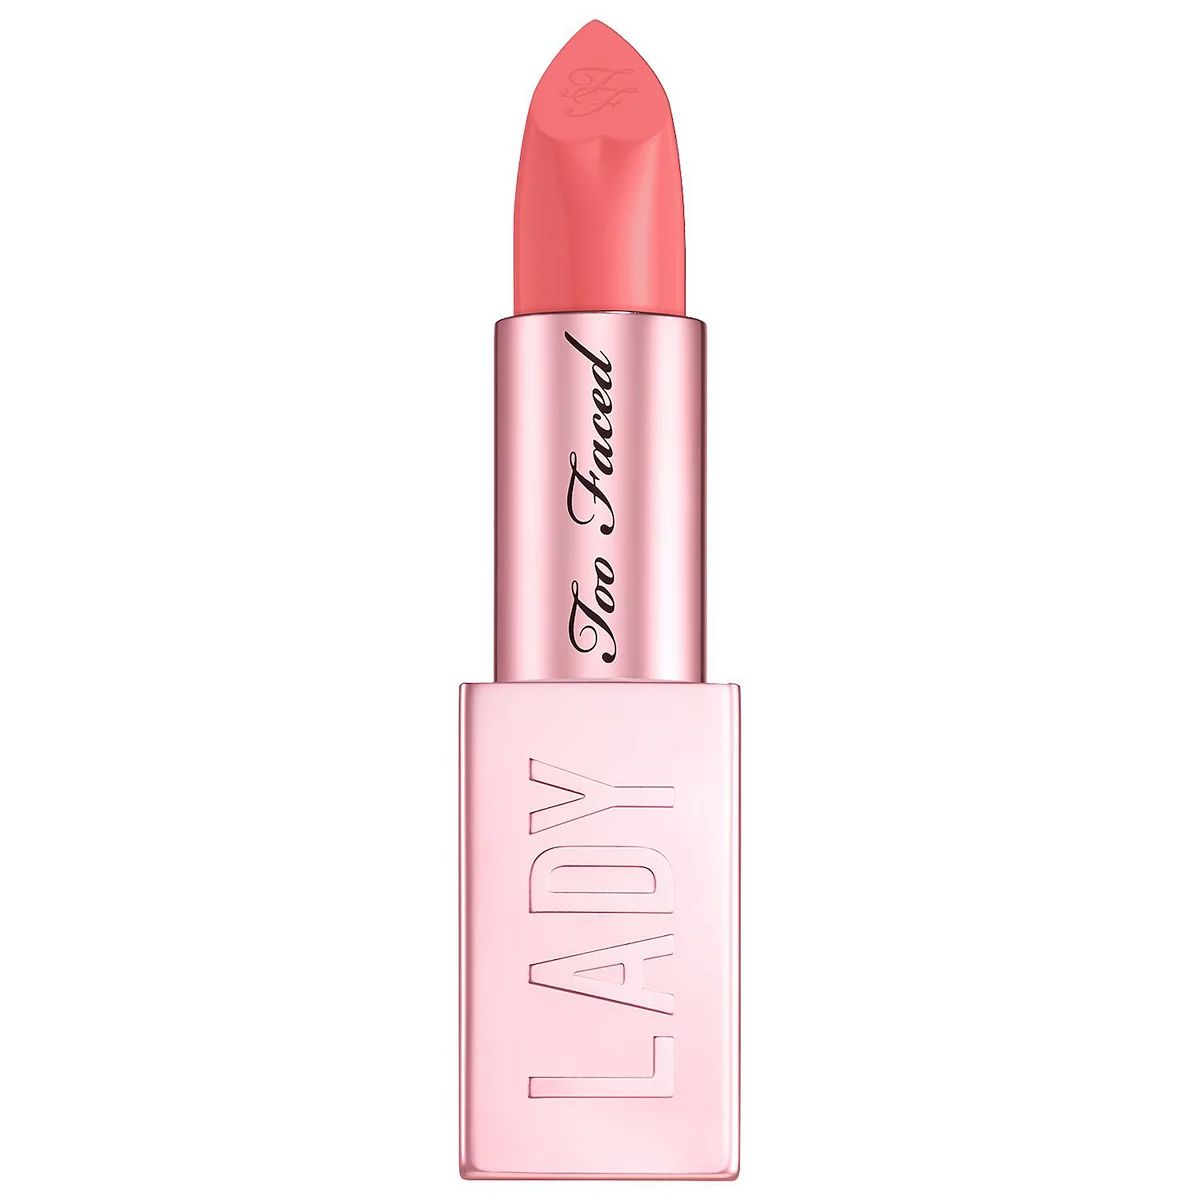 Too Faced Lady Bold Cream Lipstick | Kohl's